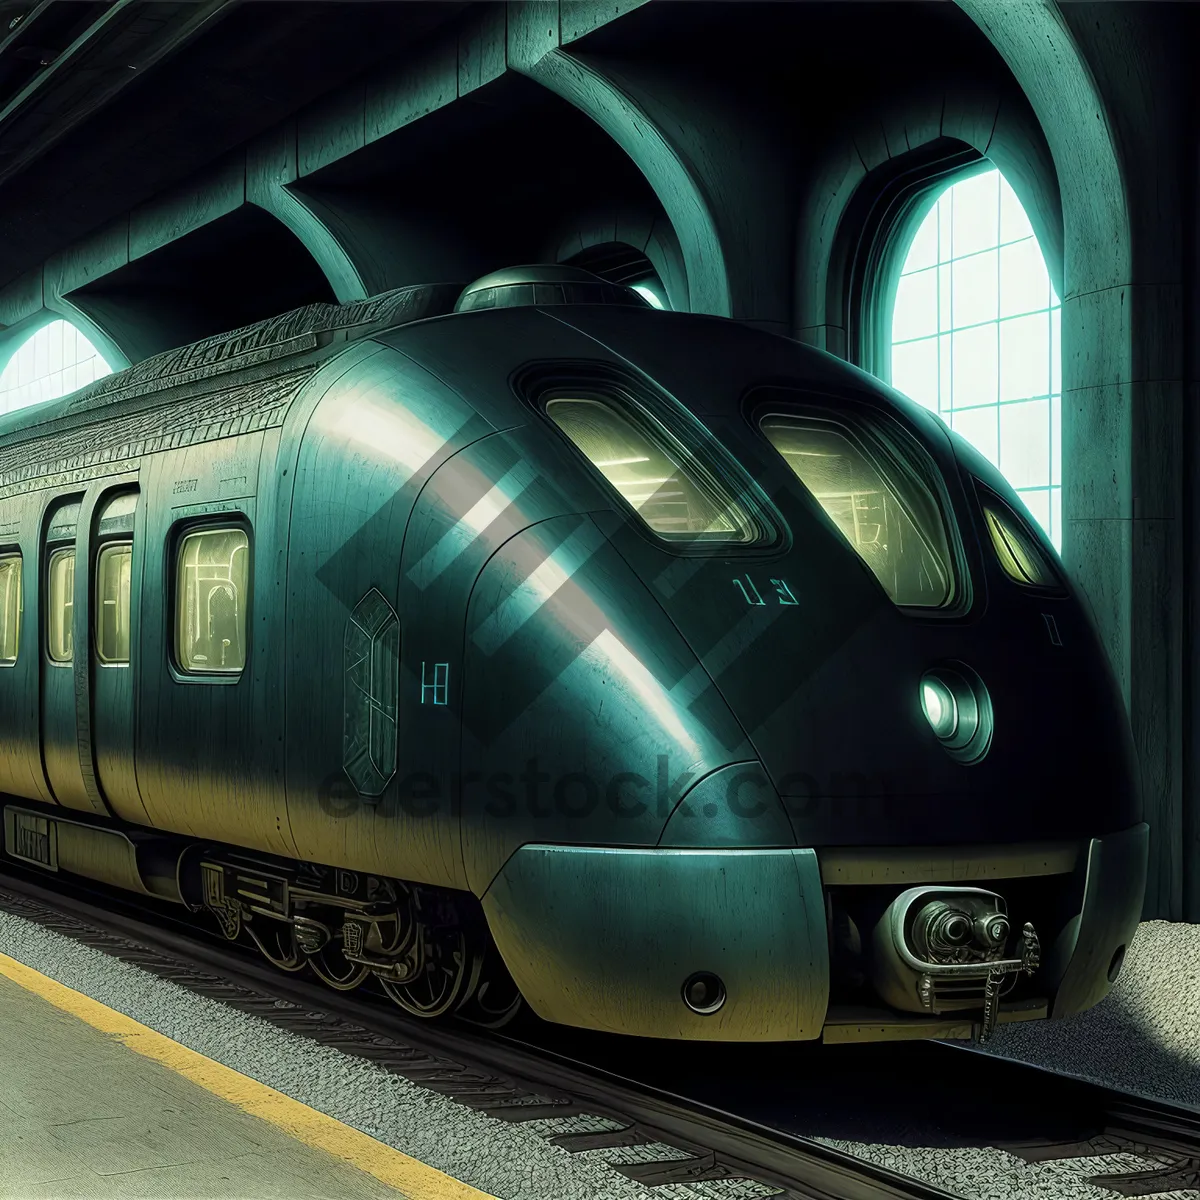 Picture of Rapid Transit: Speeding Through City on Subway Train